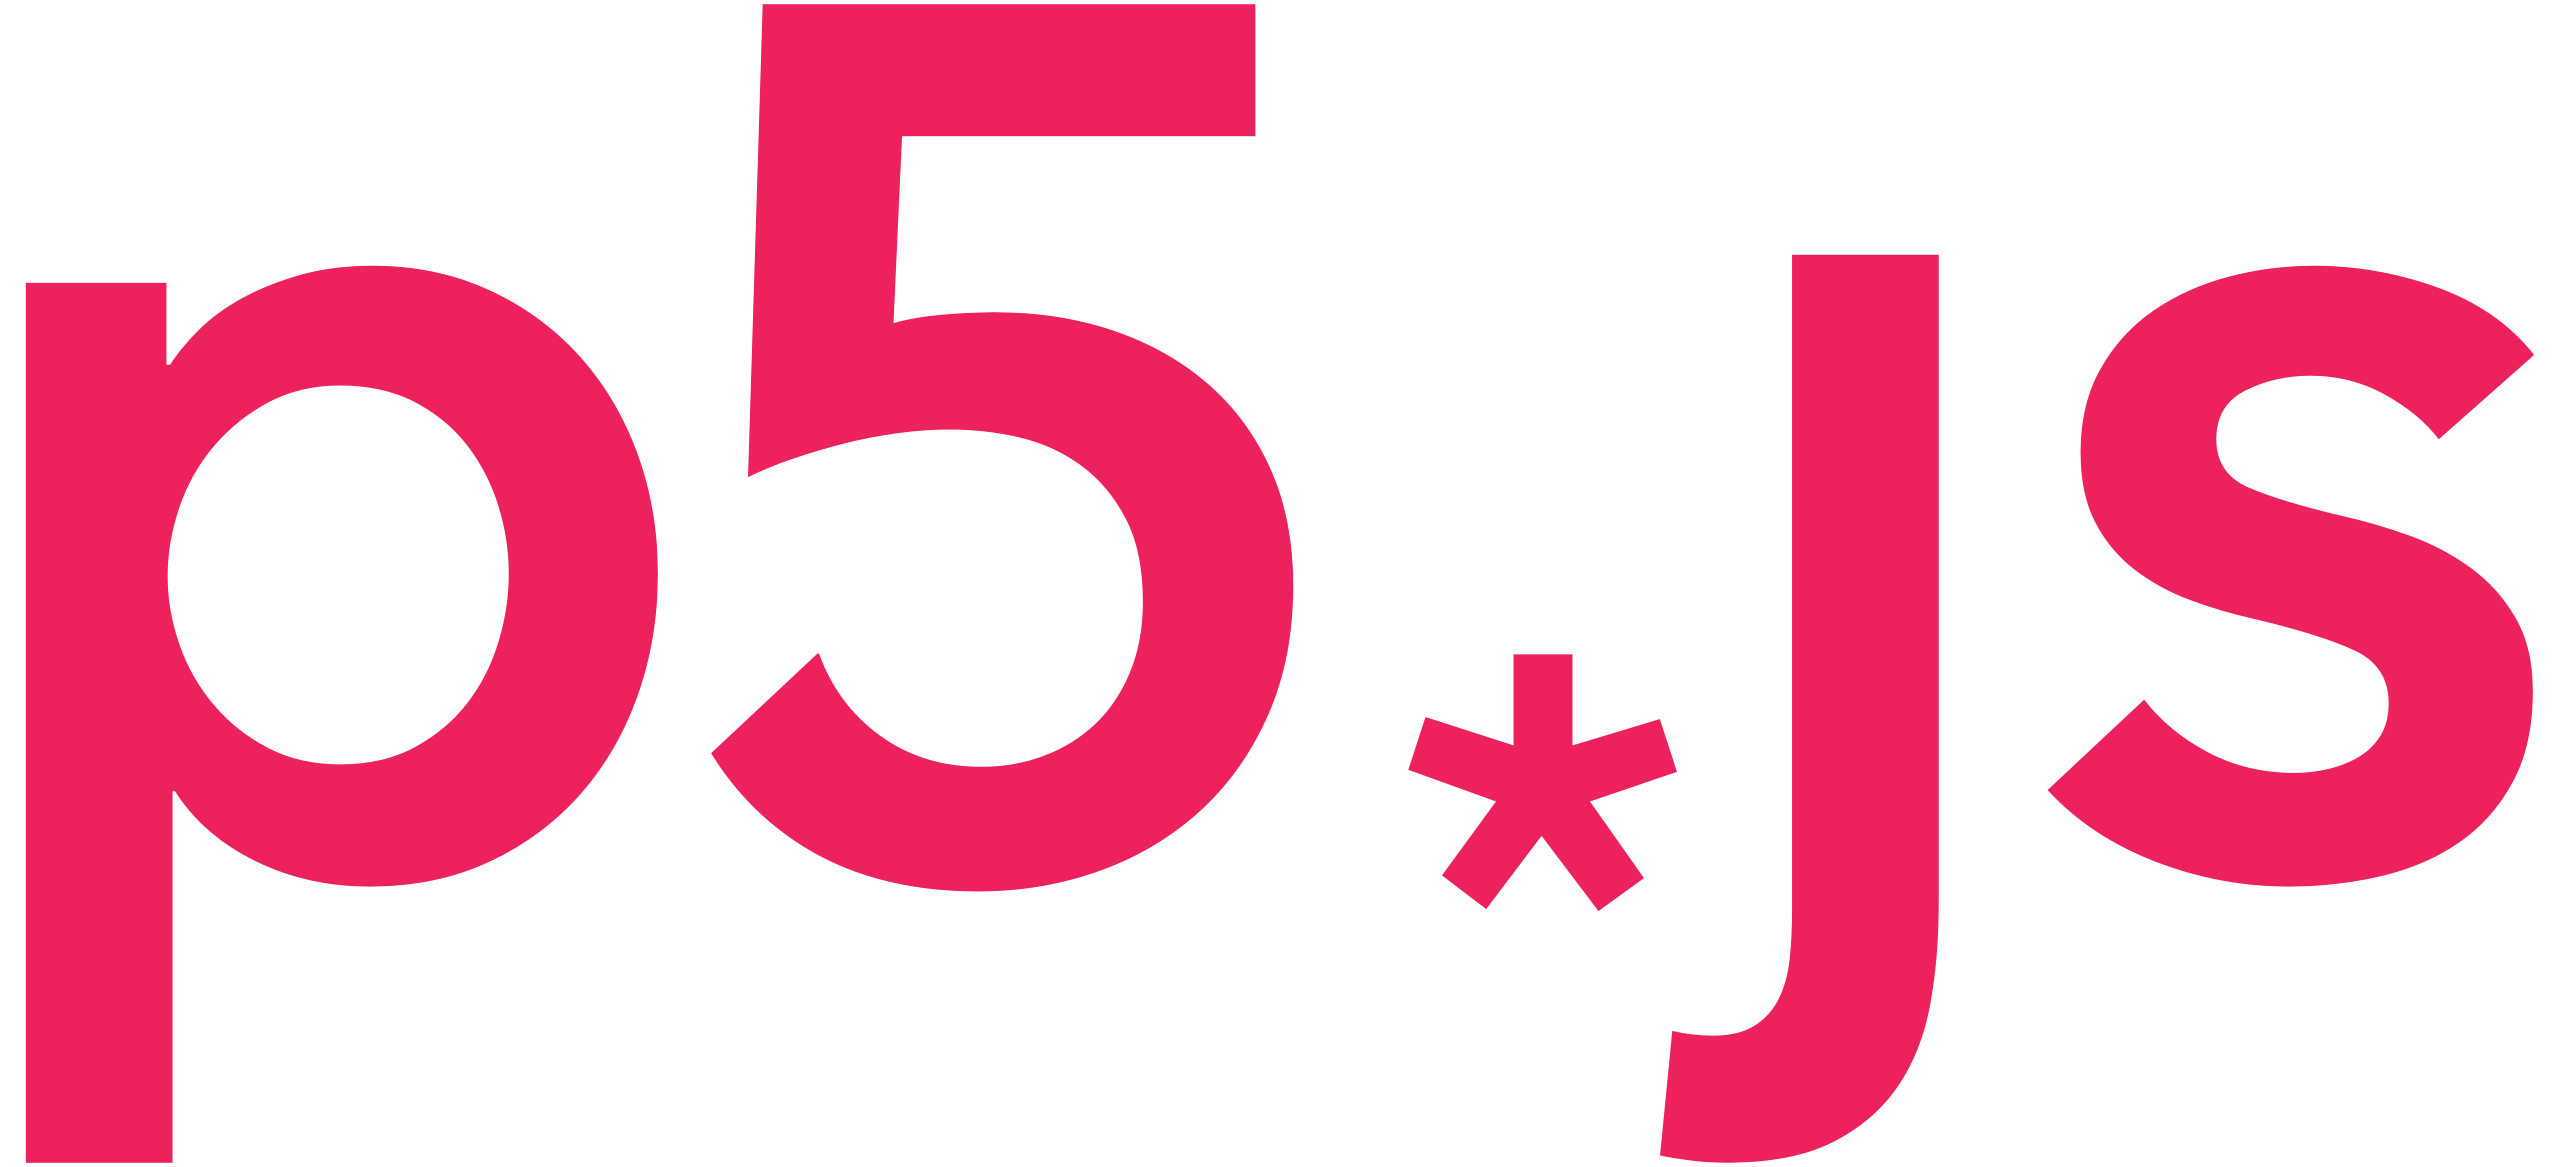 P5.js Logo